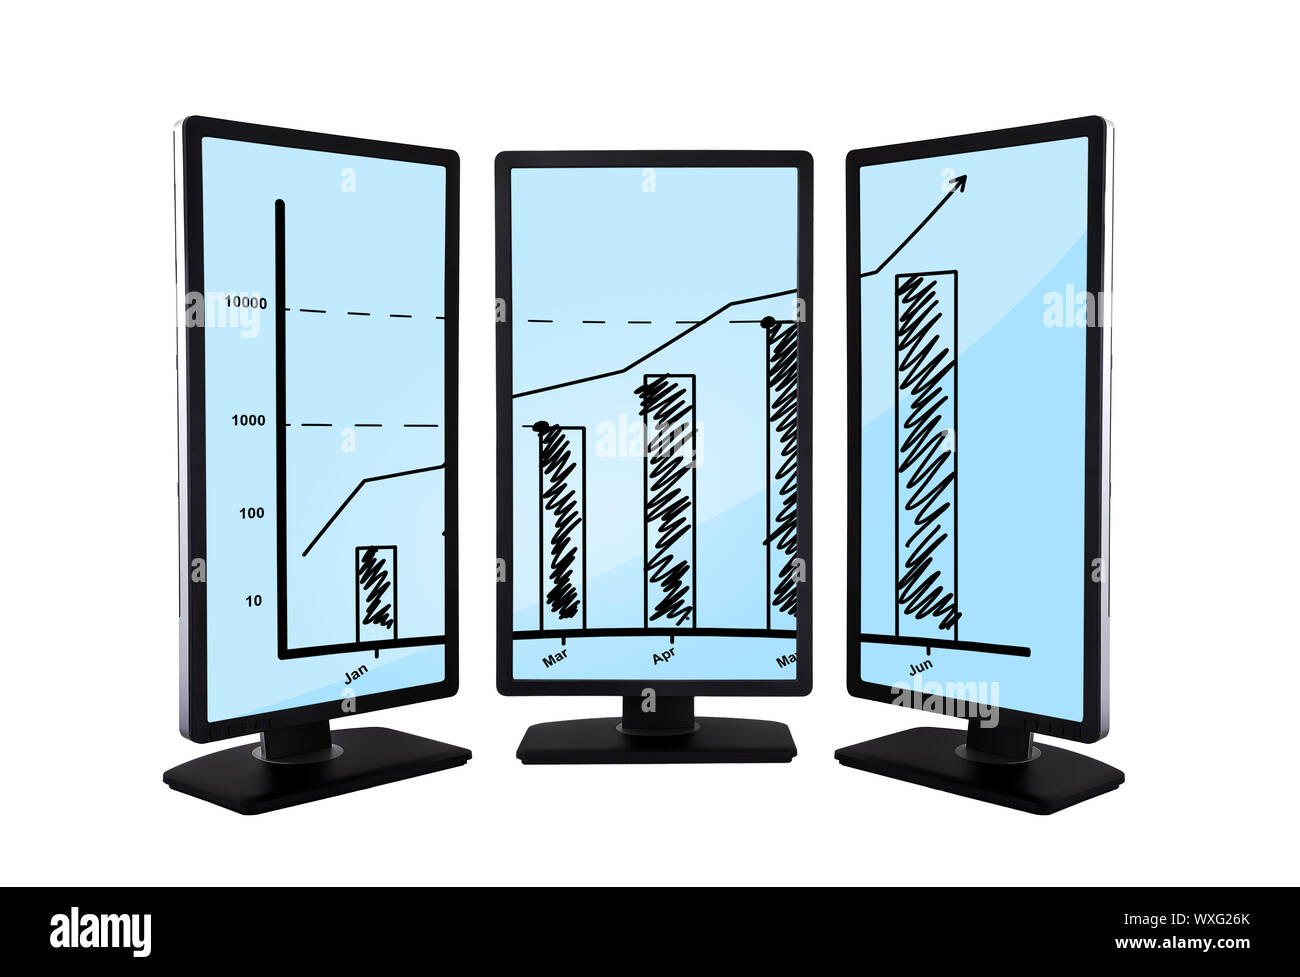 plasma with chart on screen monitors Stock Photo